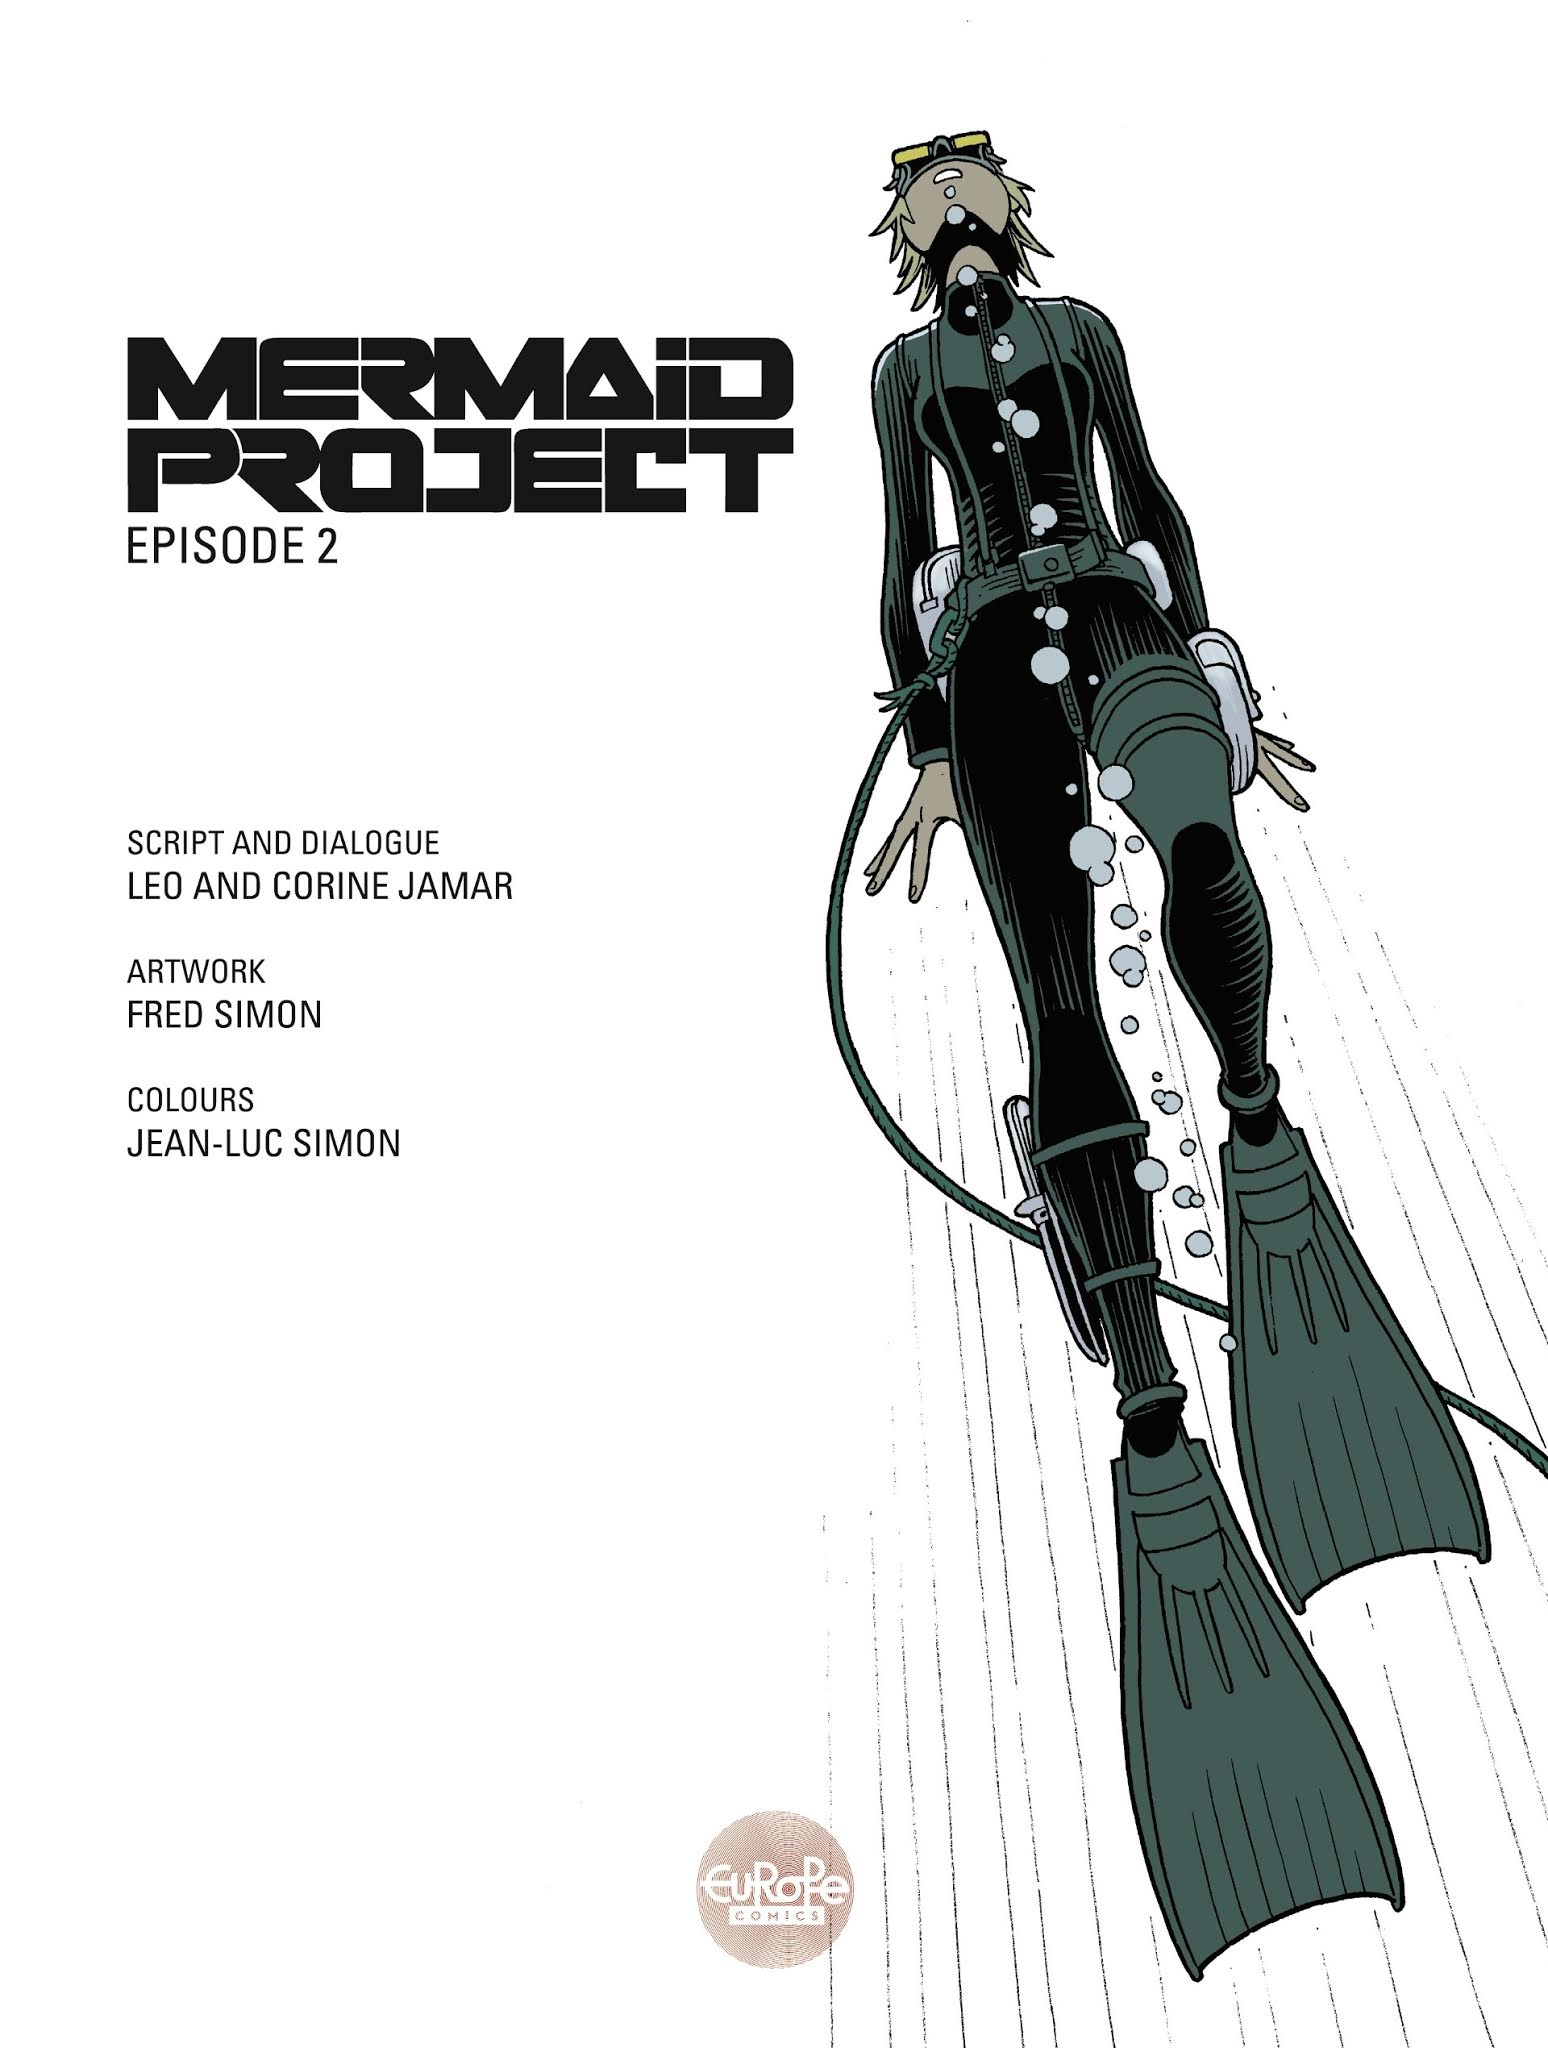 Leo Mermaid Project Episode.2